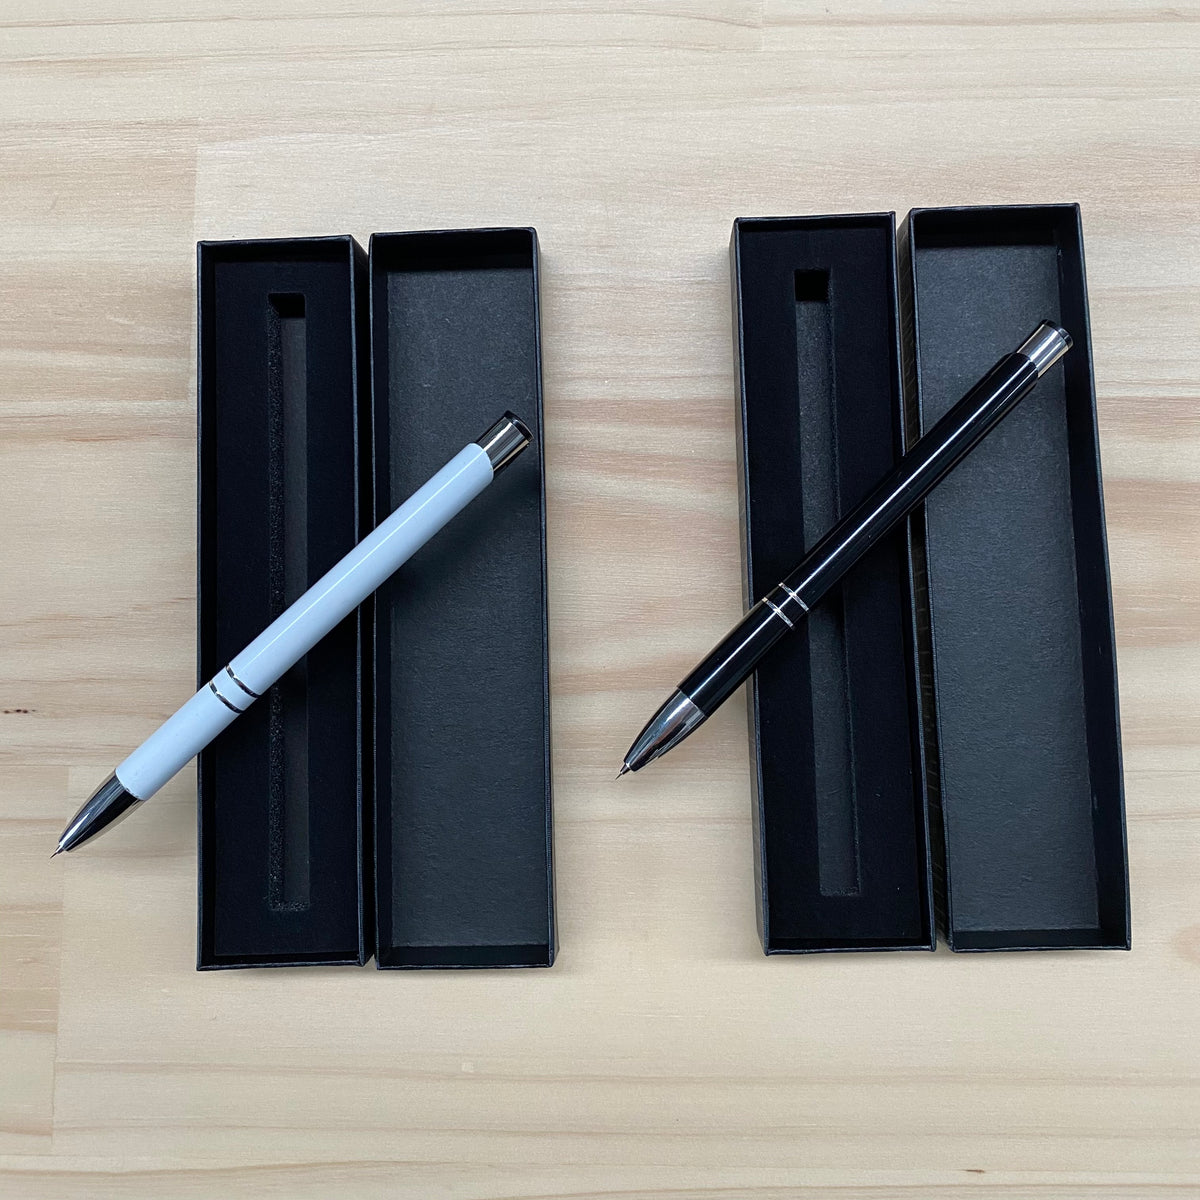 XINART Pens for Cricut Joy Marker Pens Set 36pcs Fine Point Pen Writing  Drawing Pens Compatible with Cricut Joy Machine(0.4 Tip & 1.0 Tip)